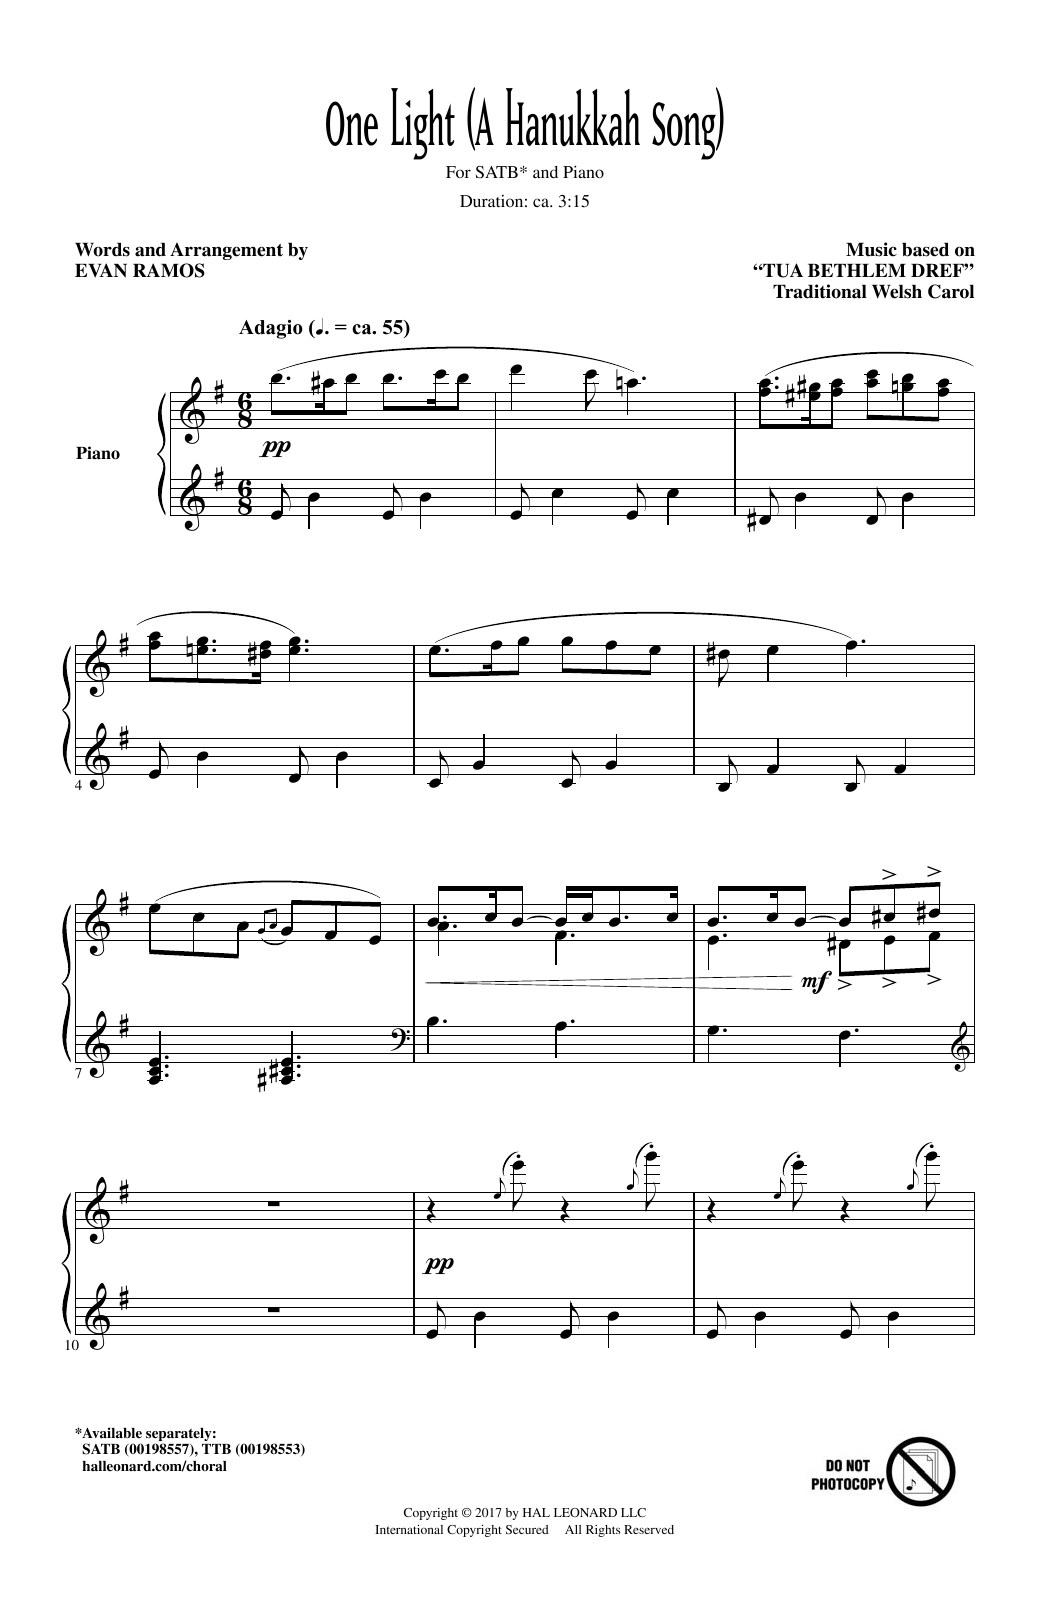 Evan Ramos One Light (A Hanukkah Song) Sheet Music Notes & Chords for SATB - Download or Print PDF